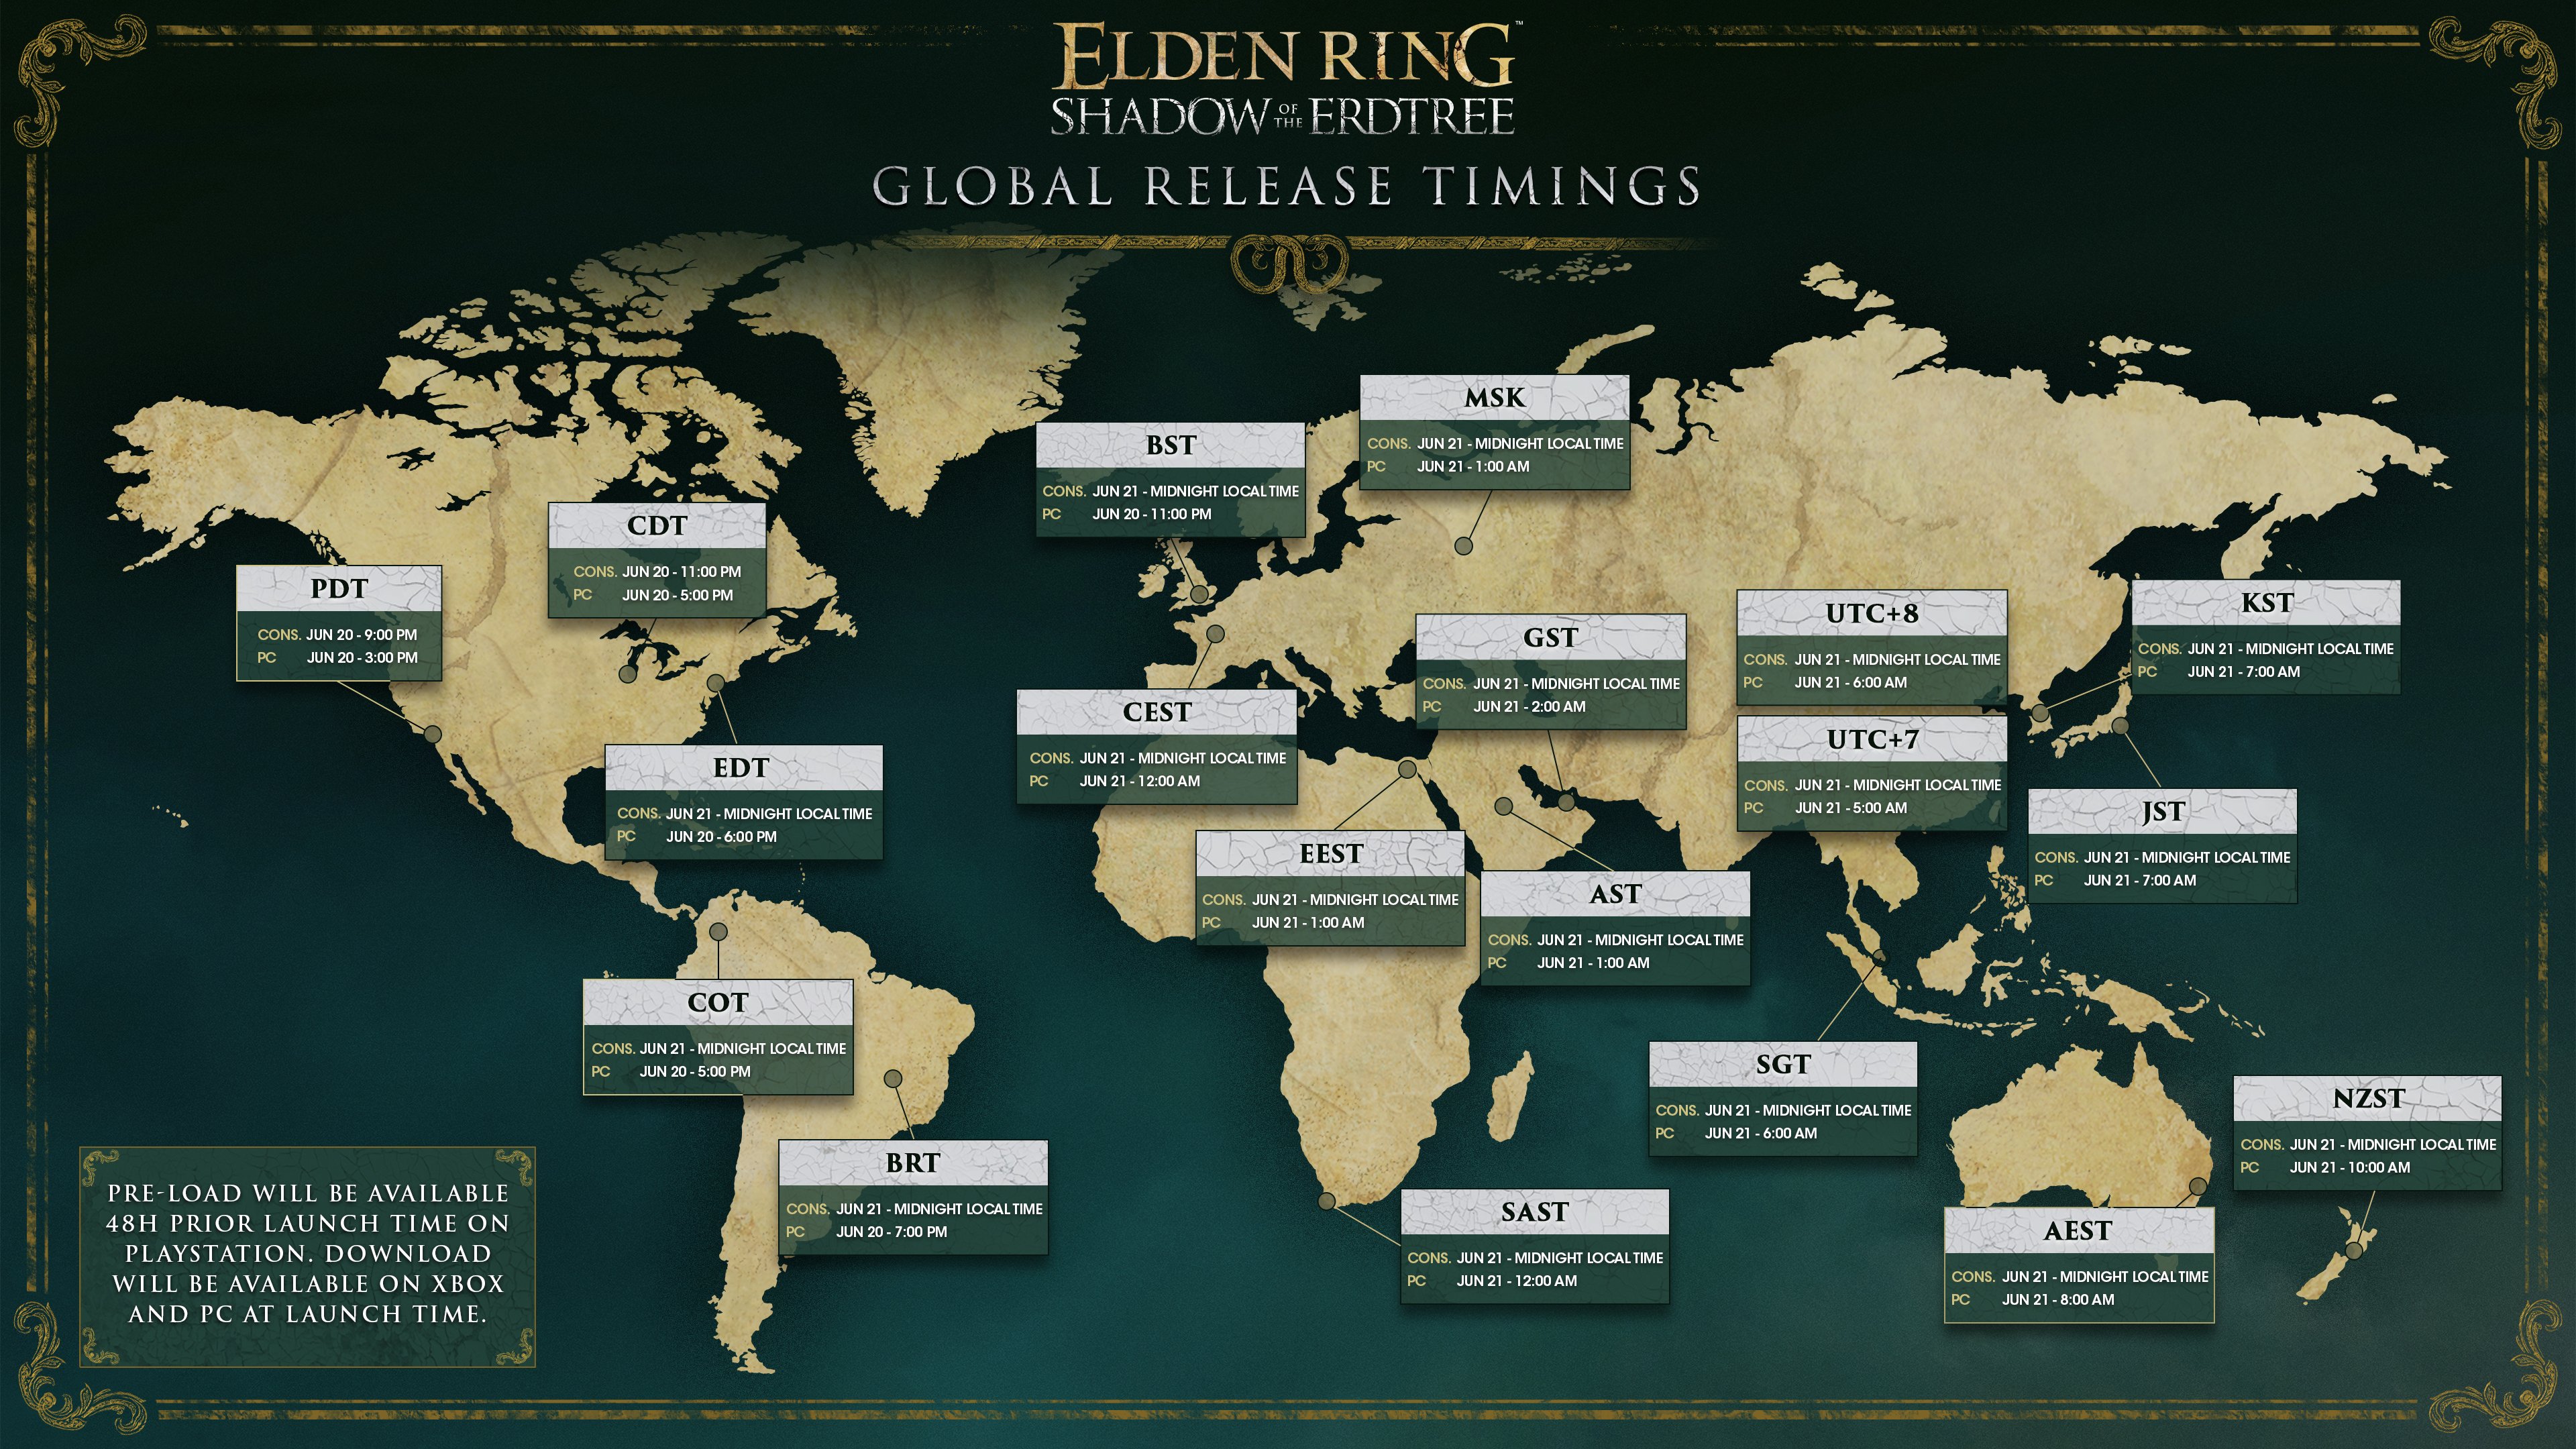 Elden Ring: Shadow of the Erdtree global release timing map